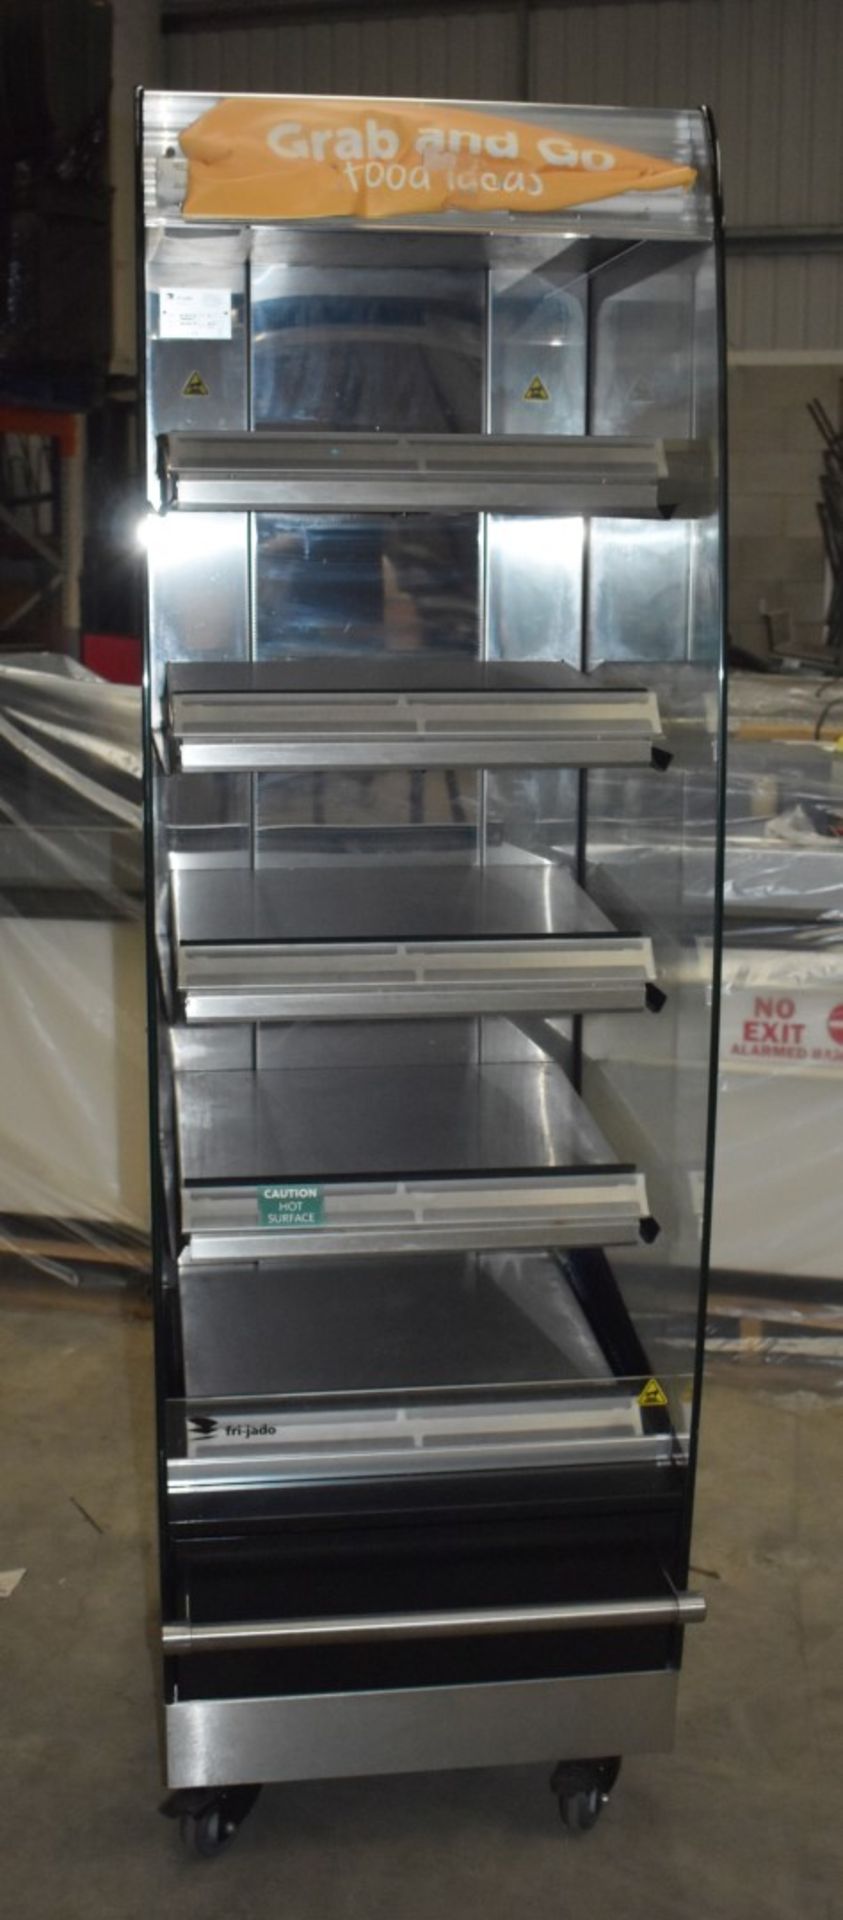 1 x Fri-Jado Four Tier Multi Deck Hot Food Warmer Heated Display Unit - Model MD60-5 SB - - Image 6 of 9